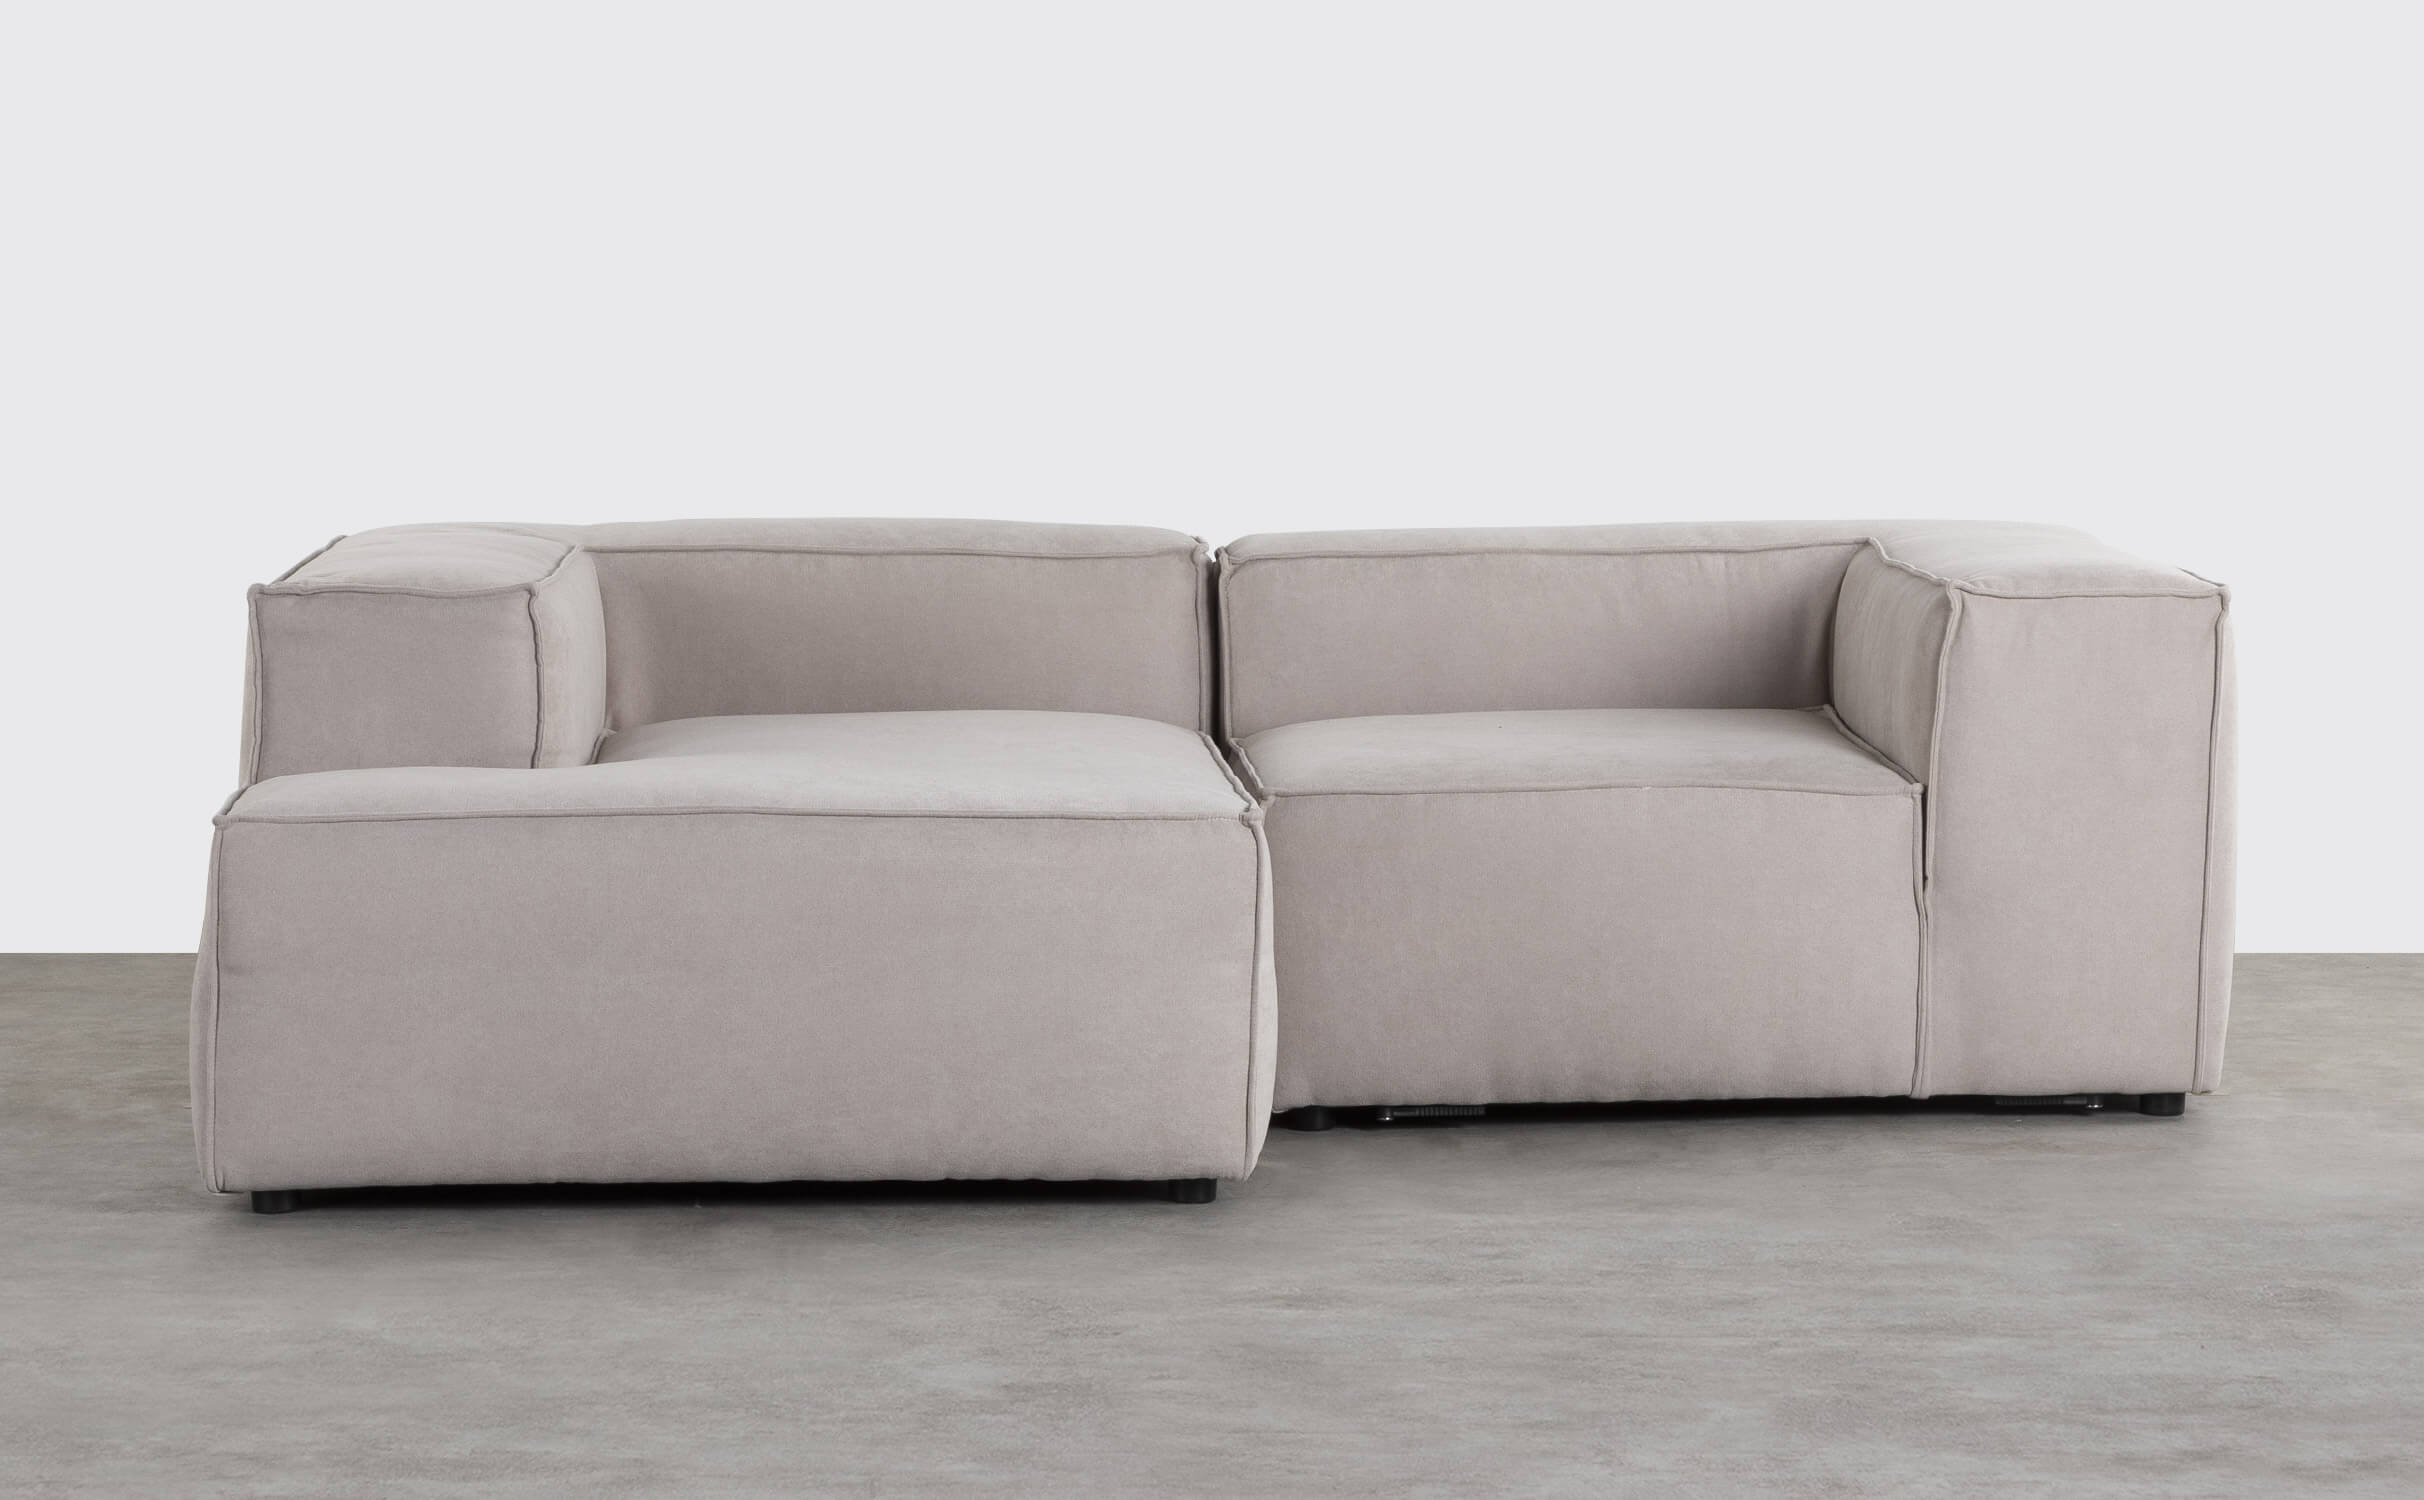 Jordan XL Modulares Chaise Longue Sofa mit Ecksessel aus Stoff, Galeriebild 1